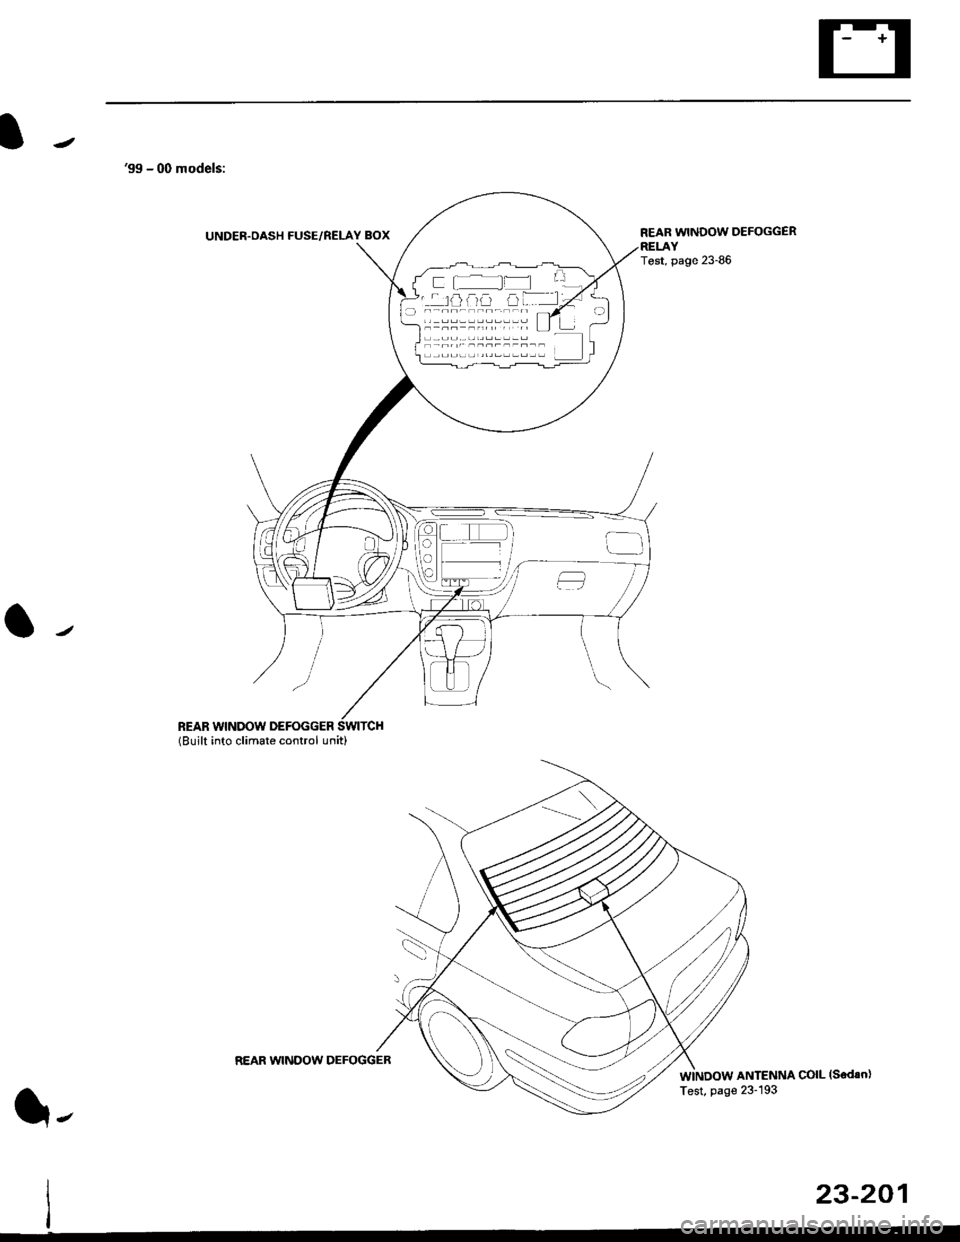 HONDA CIVIC 1996 6.G Workshop Manual 99 - 00 models:
UNDER.OASH FUSE/RELAY BOX
REAR WINDOW DEFOGGER(Built into climate control unit)
REAR WINDOW DEFOGGER
Test, page 23-86
ANTENNA COIL (Sedsn)
f l_ f= L
rofia trF.-lj
l-
REAR WINDOW DE